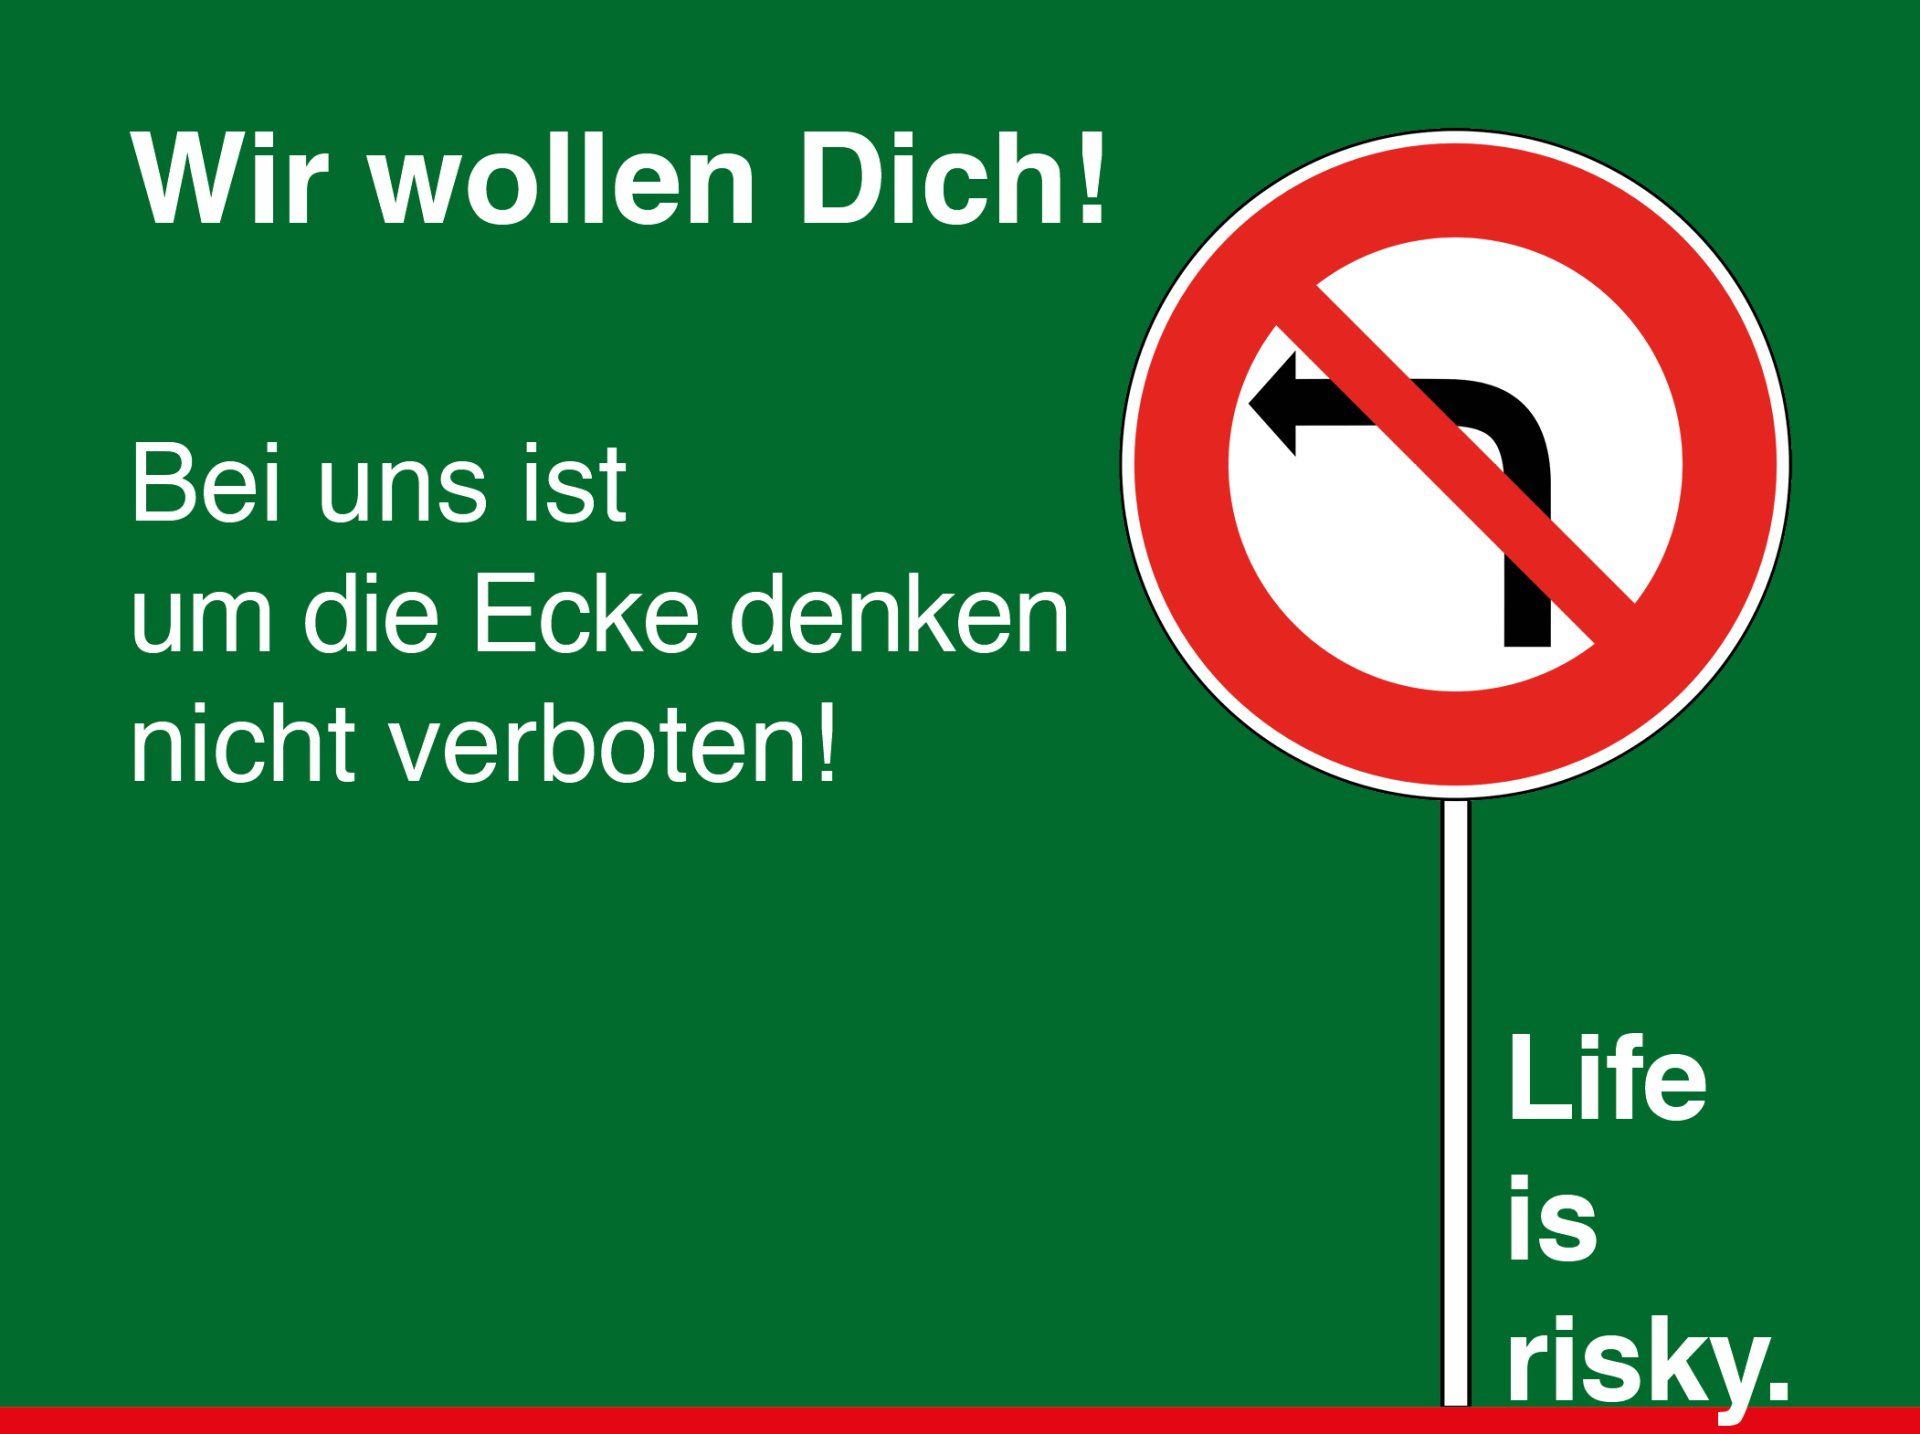 2-serve HDI Osnabrück Life is risky. Um die Ecke denken